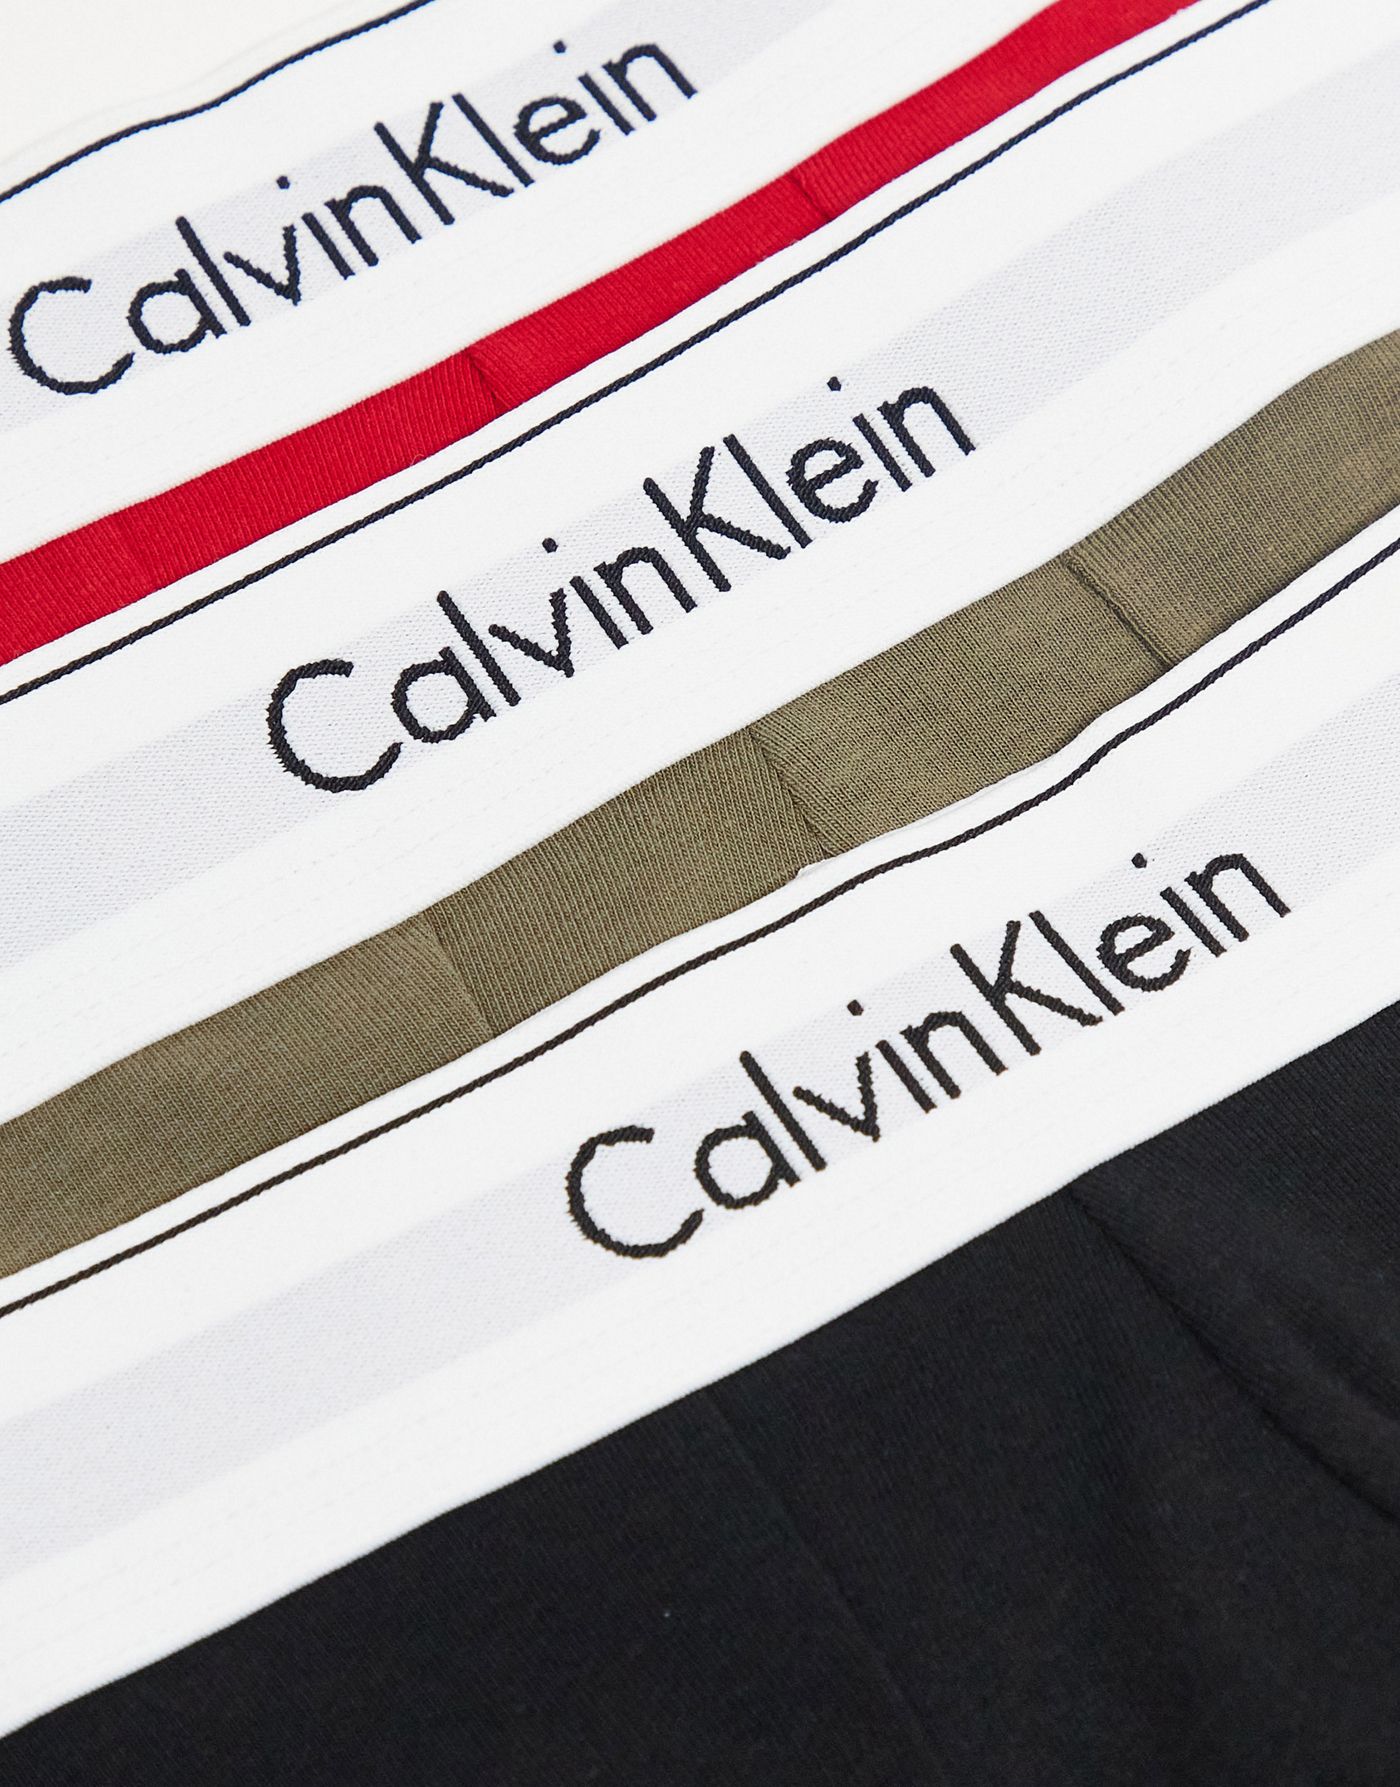 Calvin Klein 3 pack cotton stretch trunks in  multi